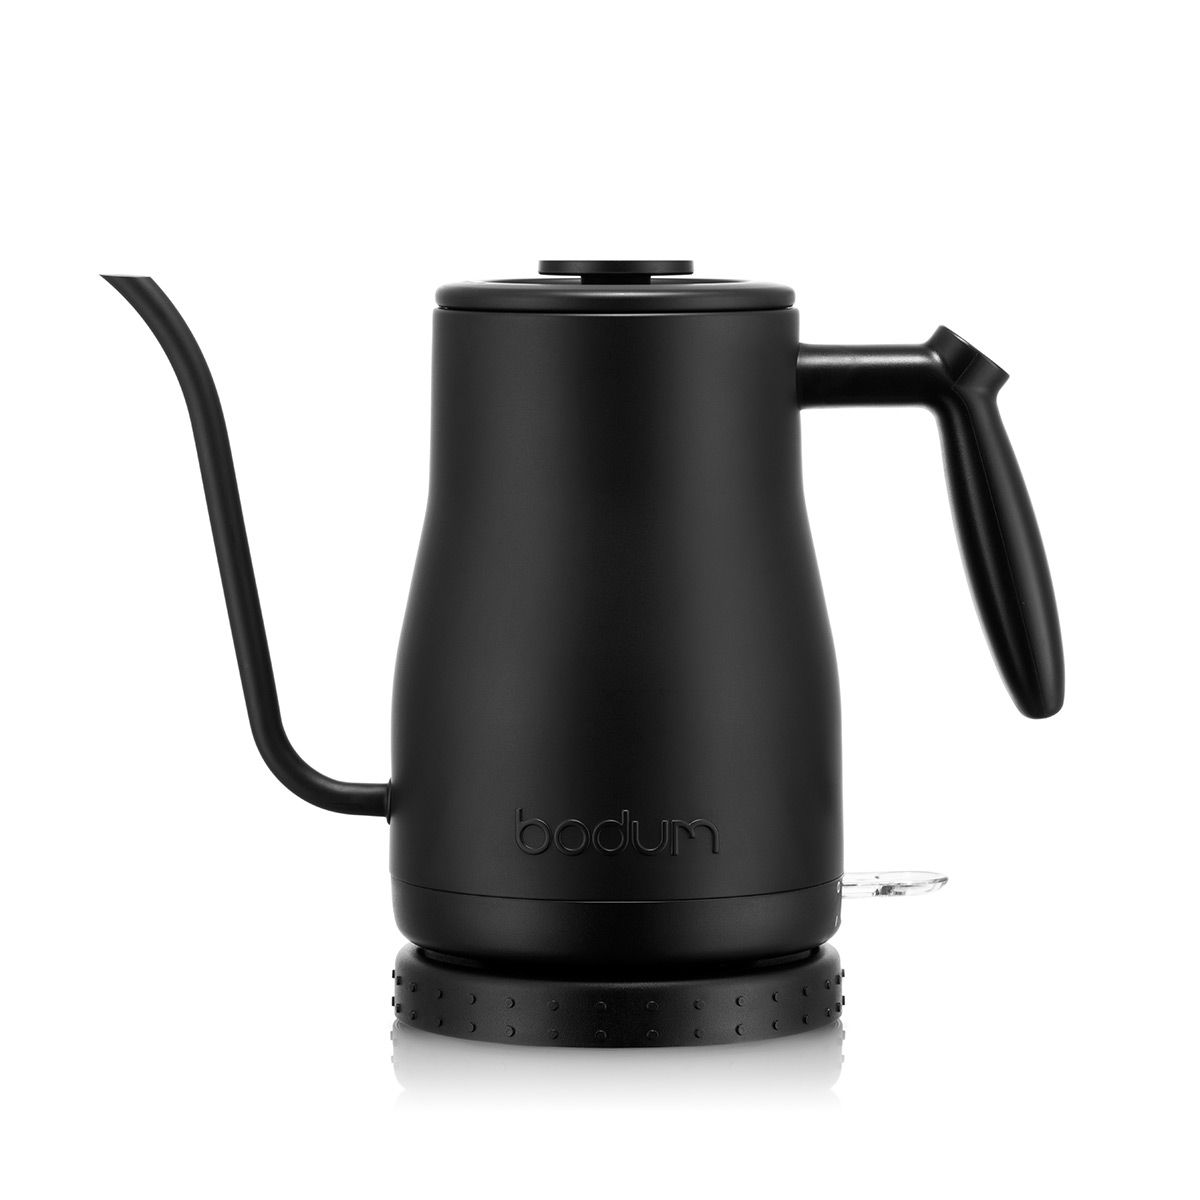 Bodum - Bistro - Gooseneck Electric water kettle, 1.0l $35.99 + $9.95 ship or Free Ship $60+